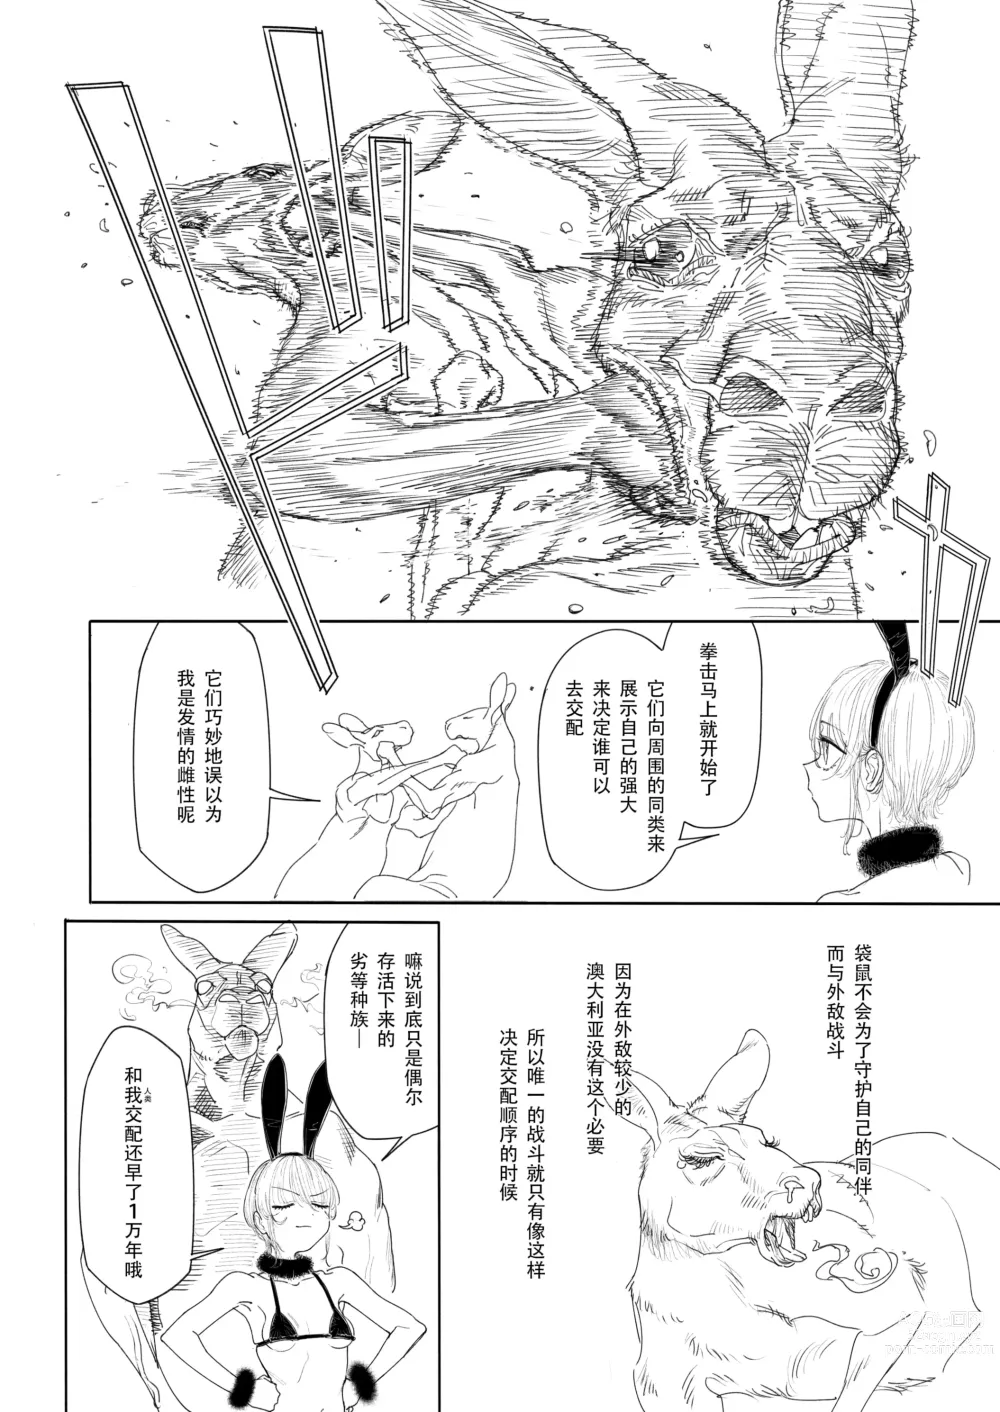 Page 6 of doujinshi Kangaroo no Kimochi Ii